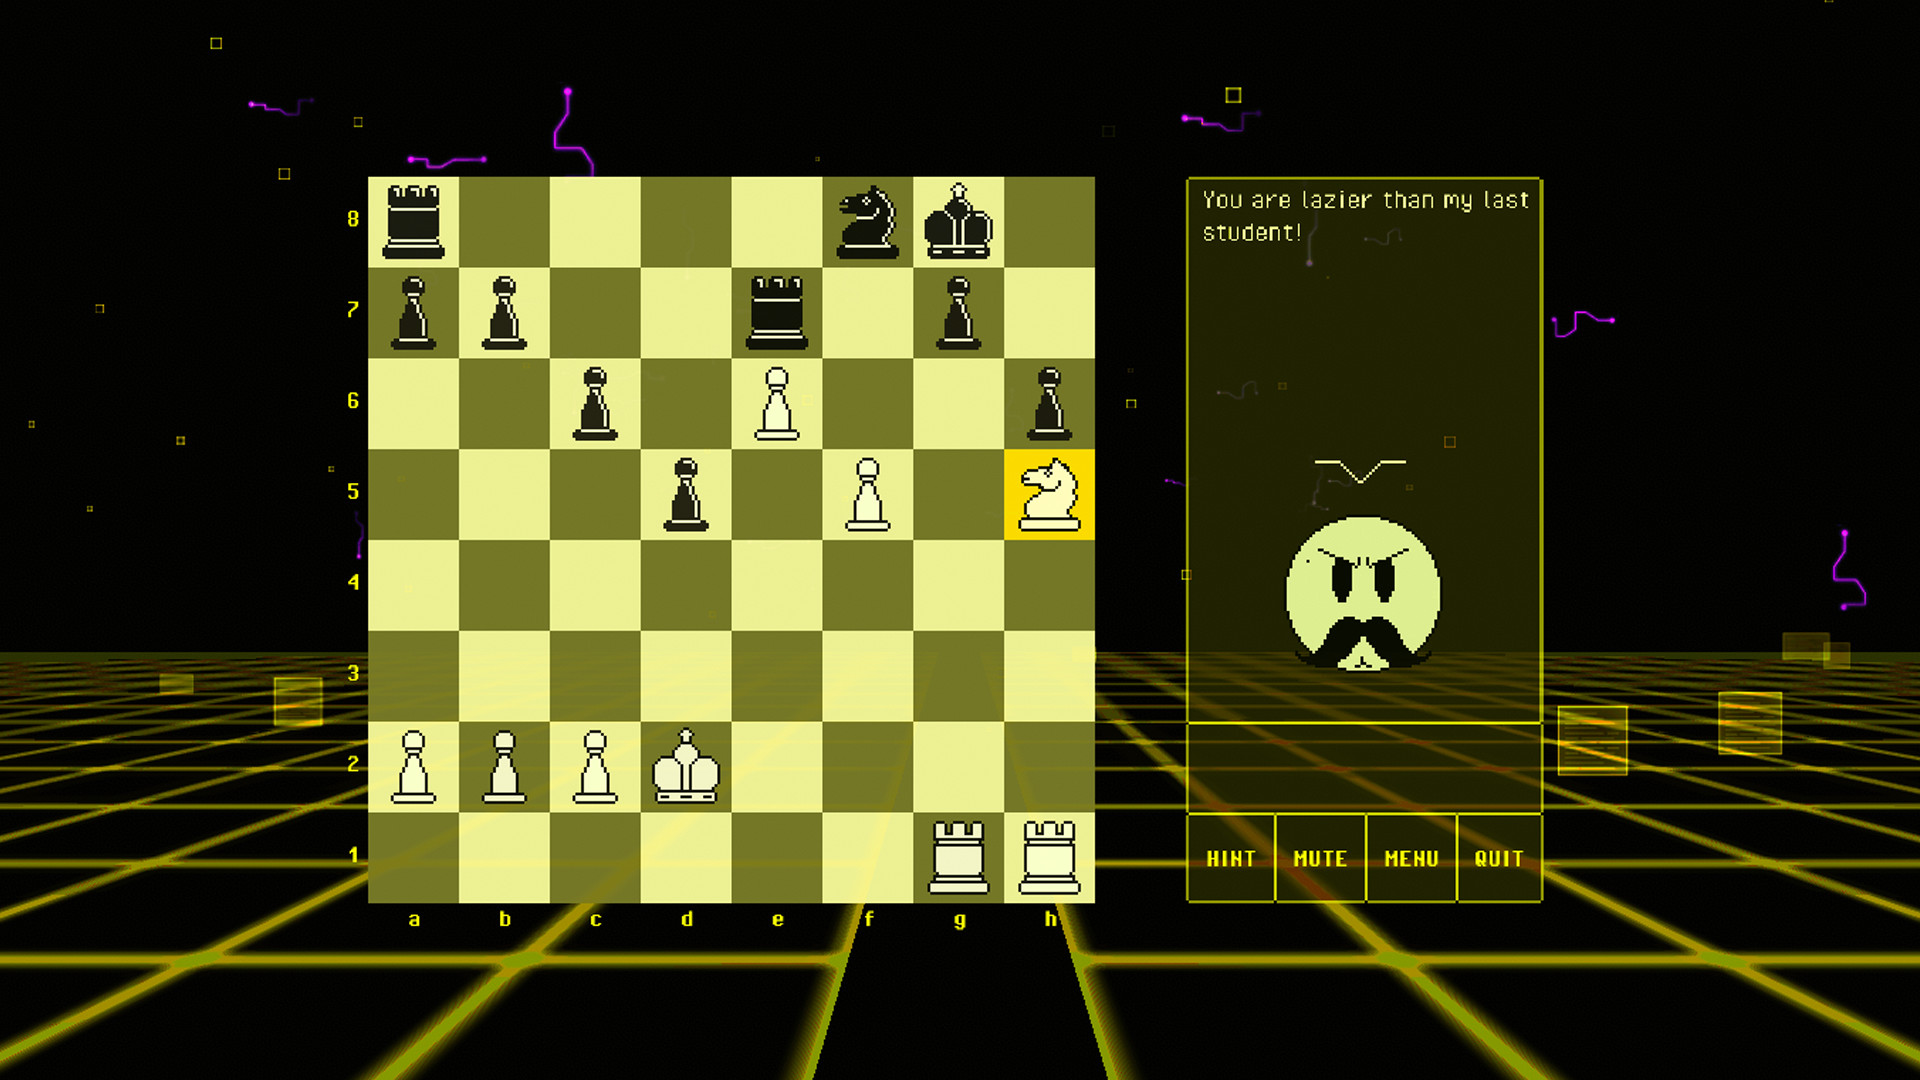 [$ 0.67] BOT.vinnik Chess: Winning Patterns Steam CD Key